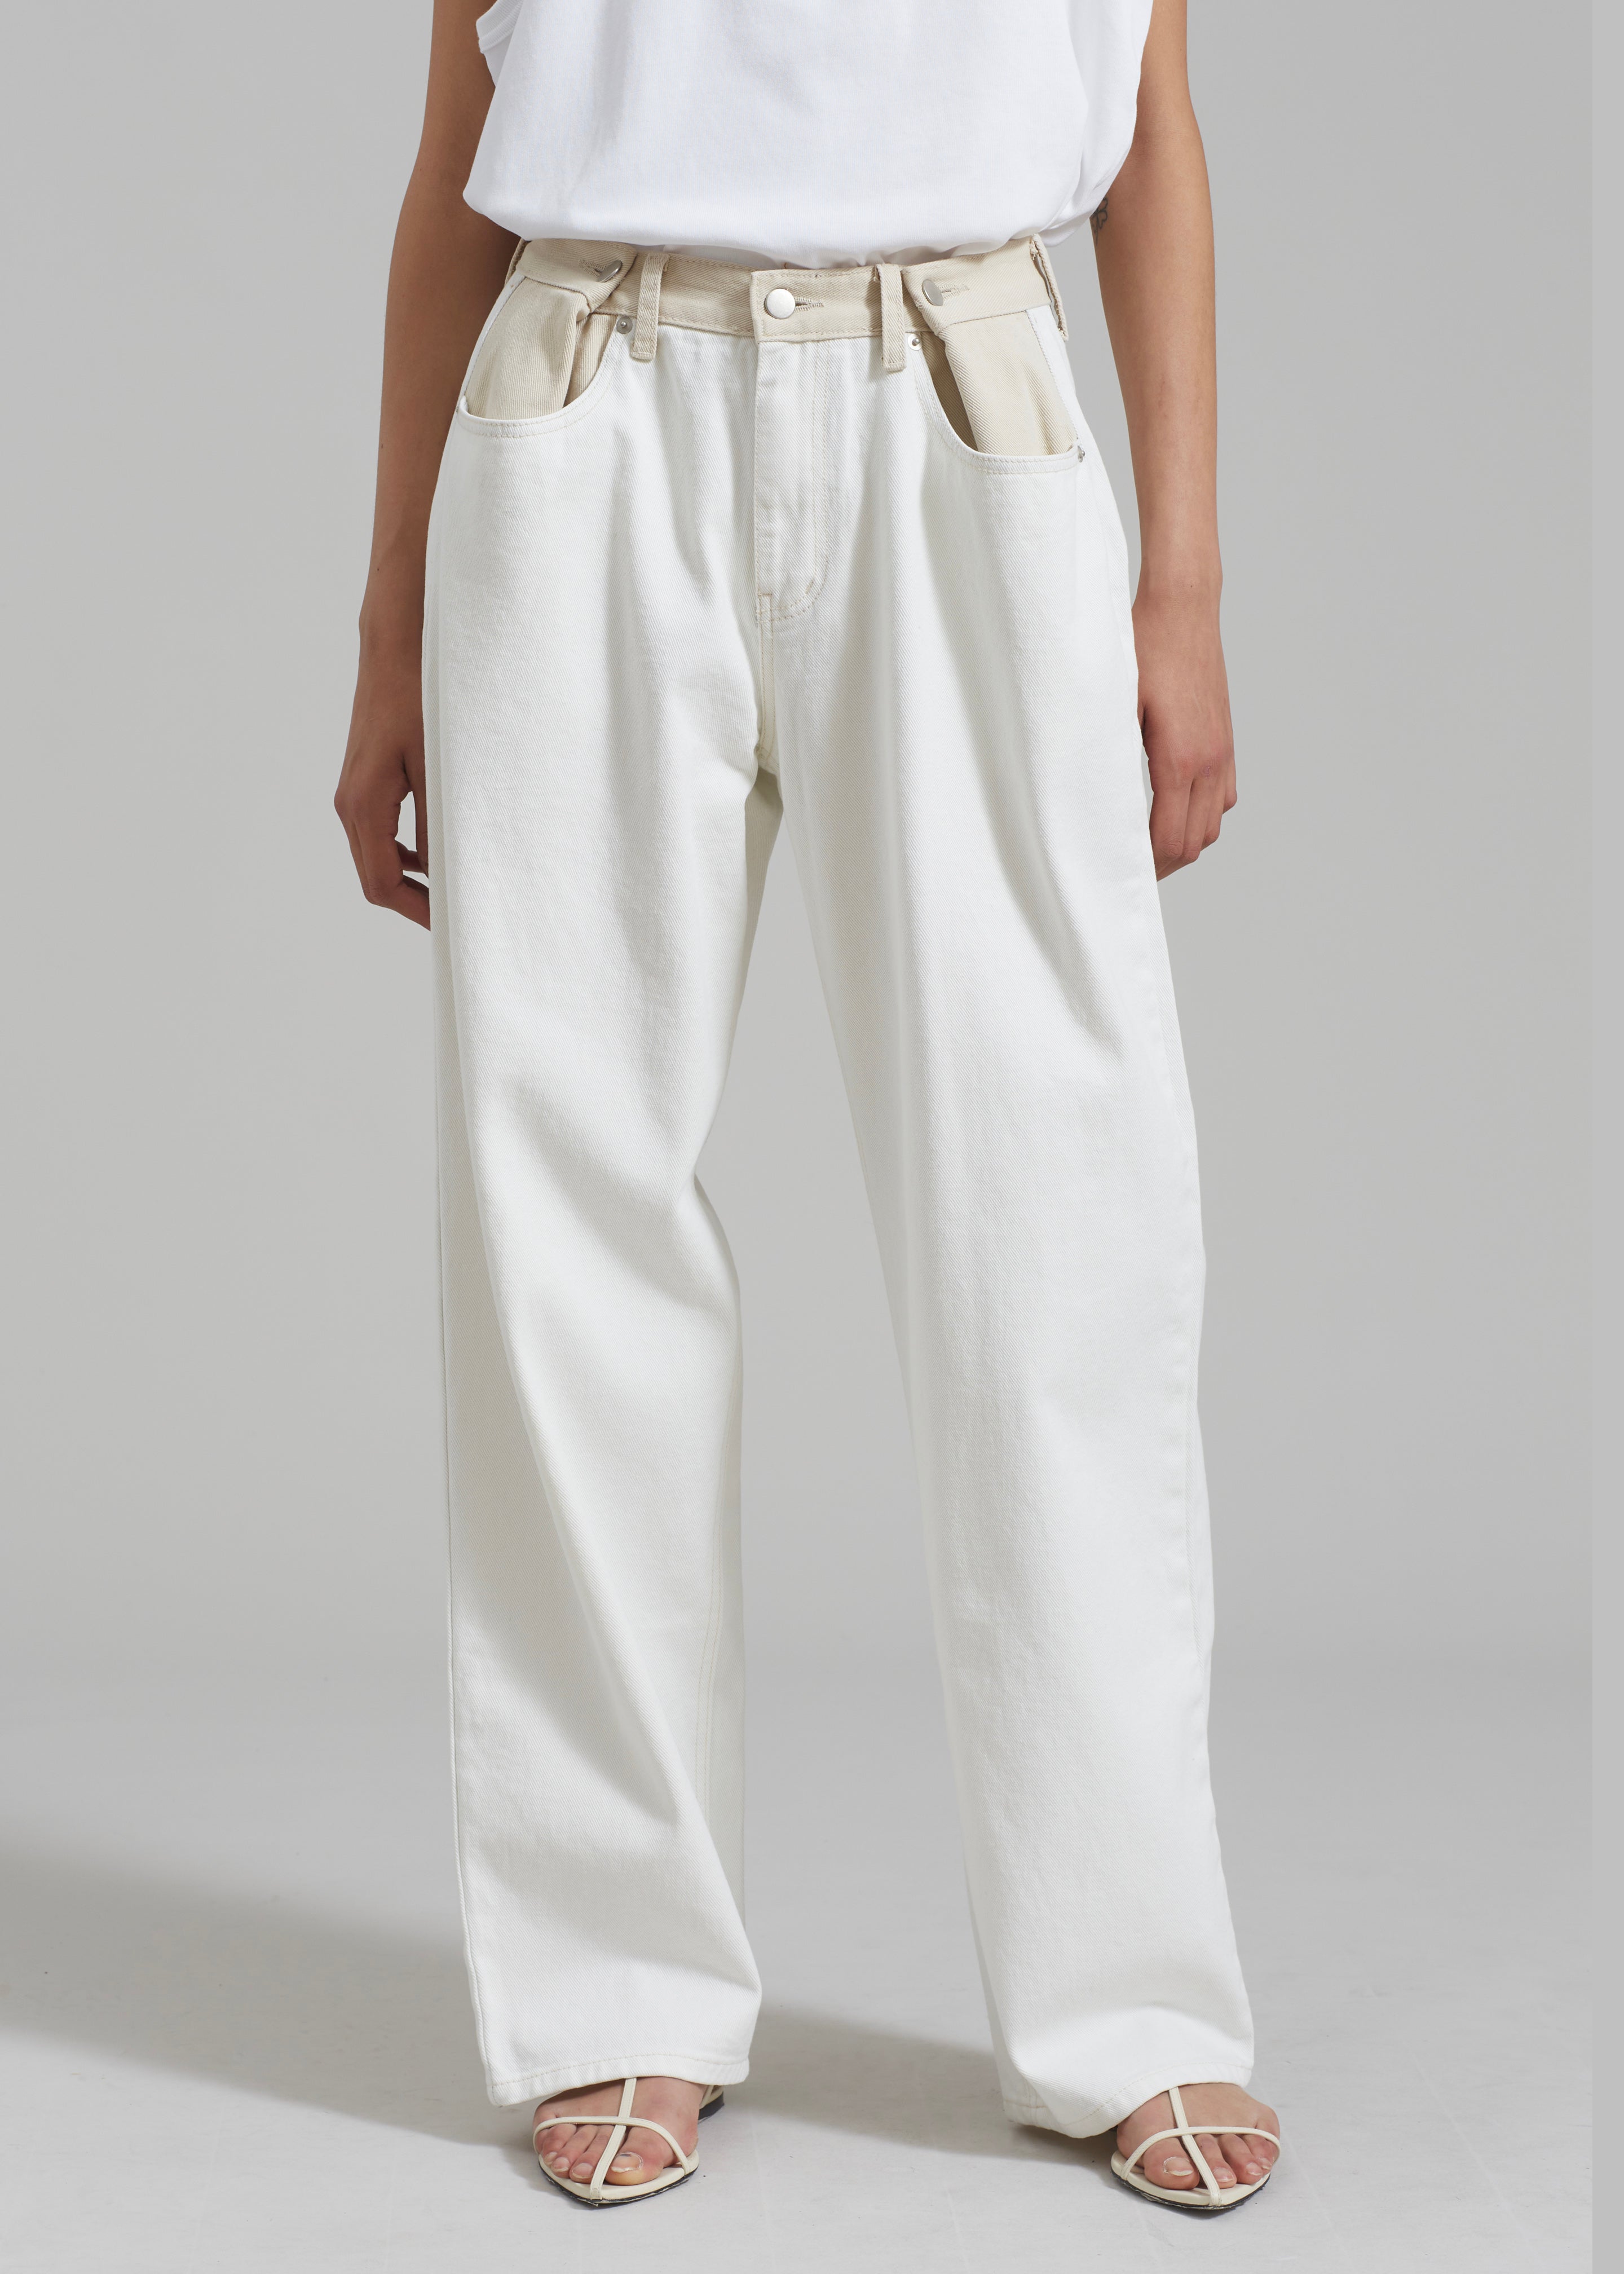 Celine Denim Pants in White | Lyst